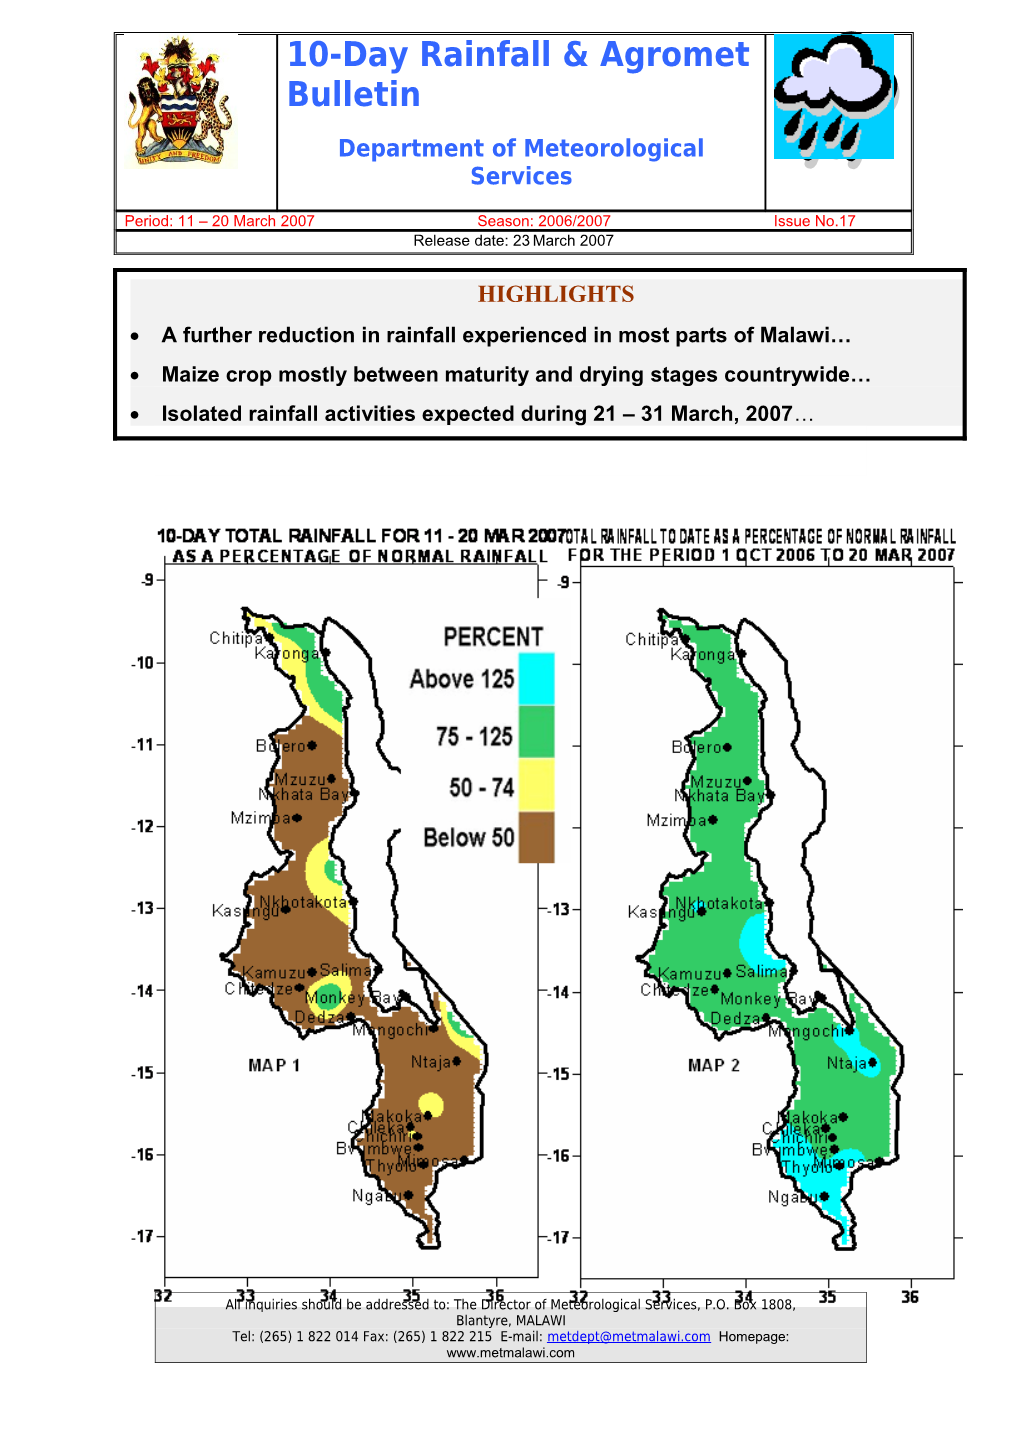 Period: 01 10 November 1998 Rainfall and Agromet Bulletin